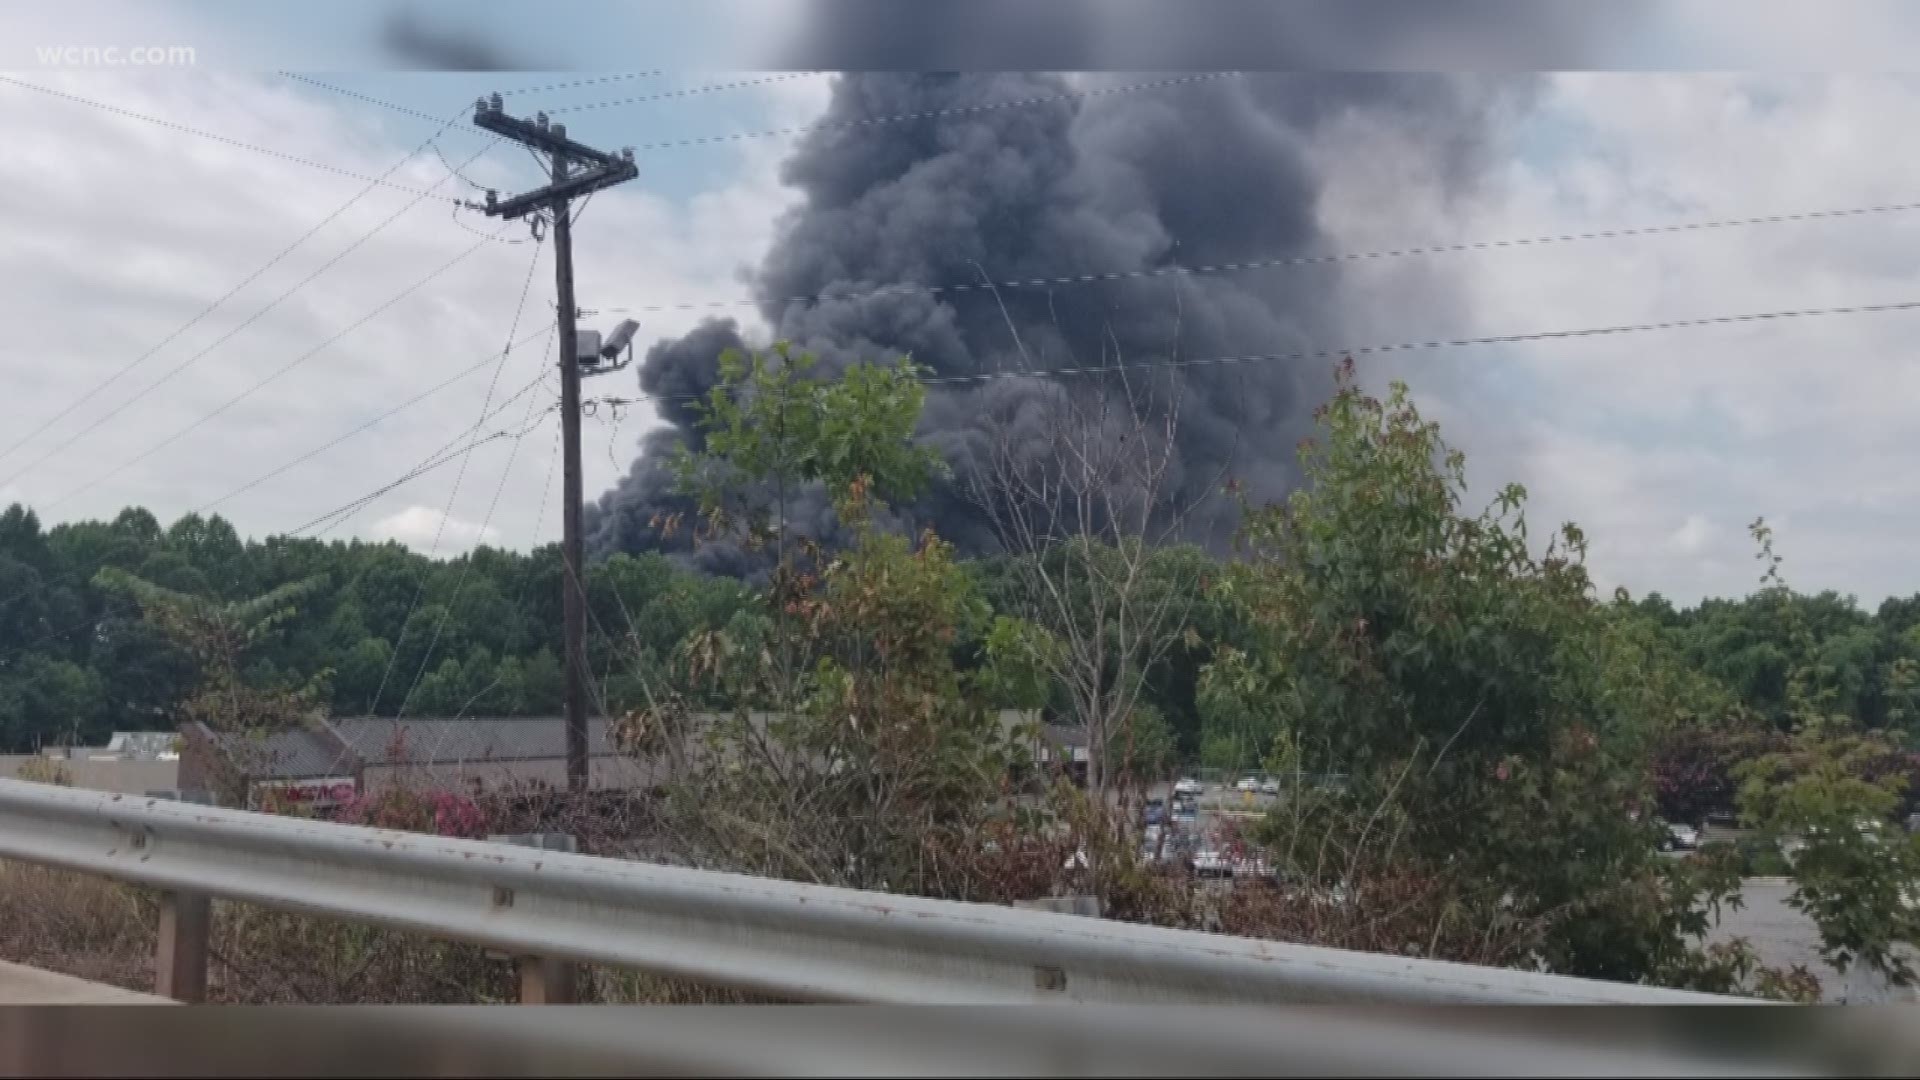 Emergency crews in Rowan County are battling a large fire at a scrapyard near Salisbury.